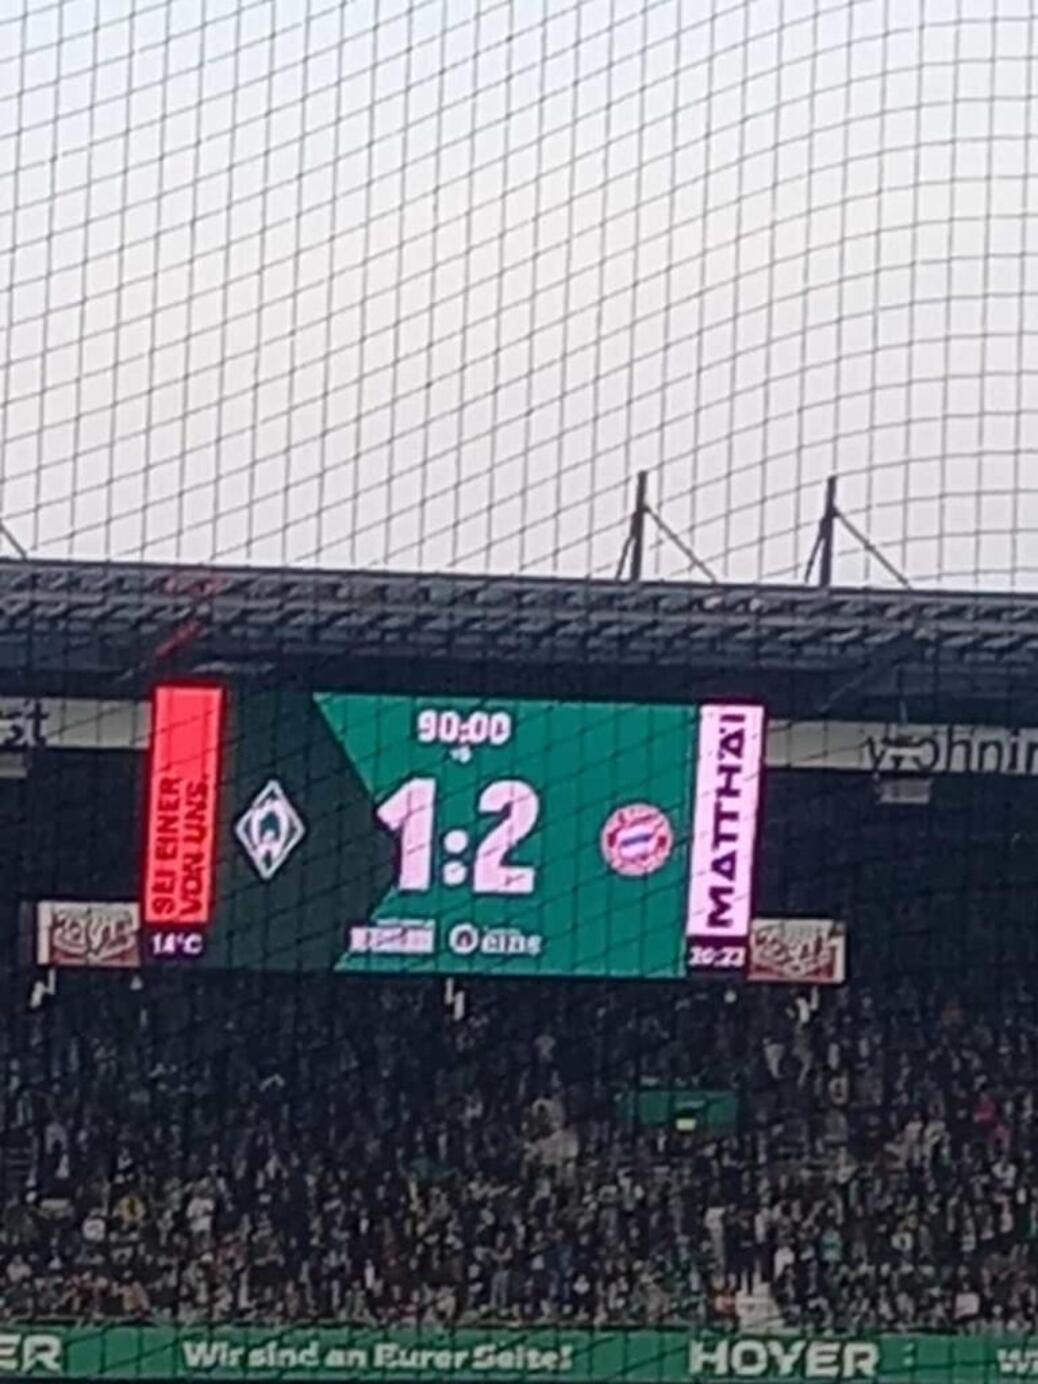 SV Werder Bremen  vs  FC BAYERN